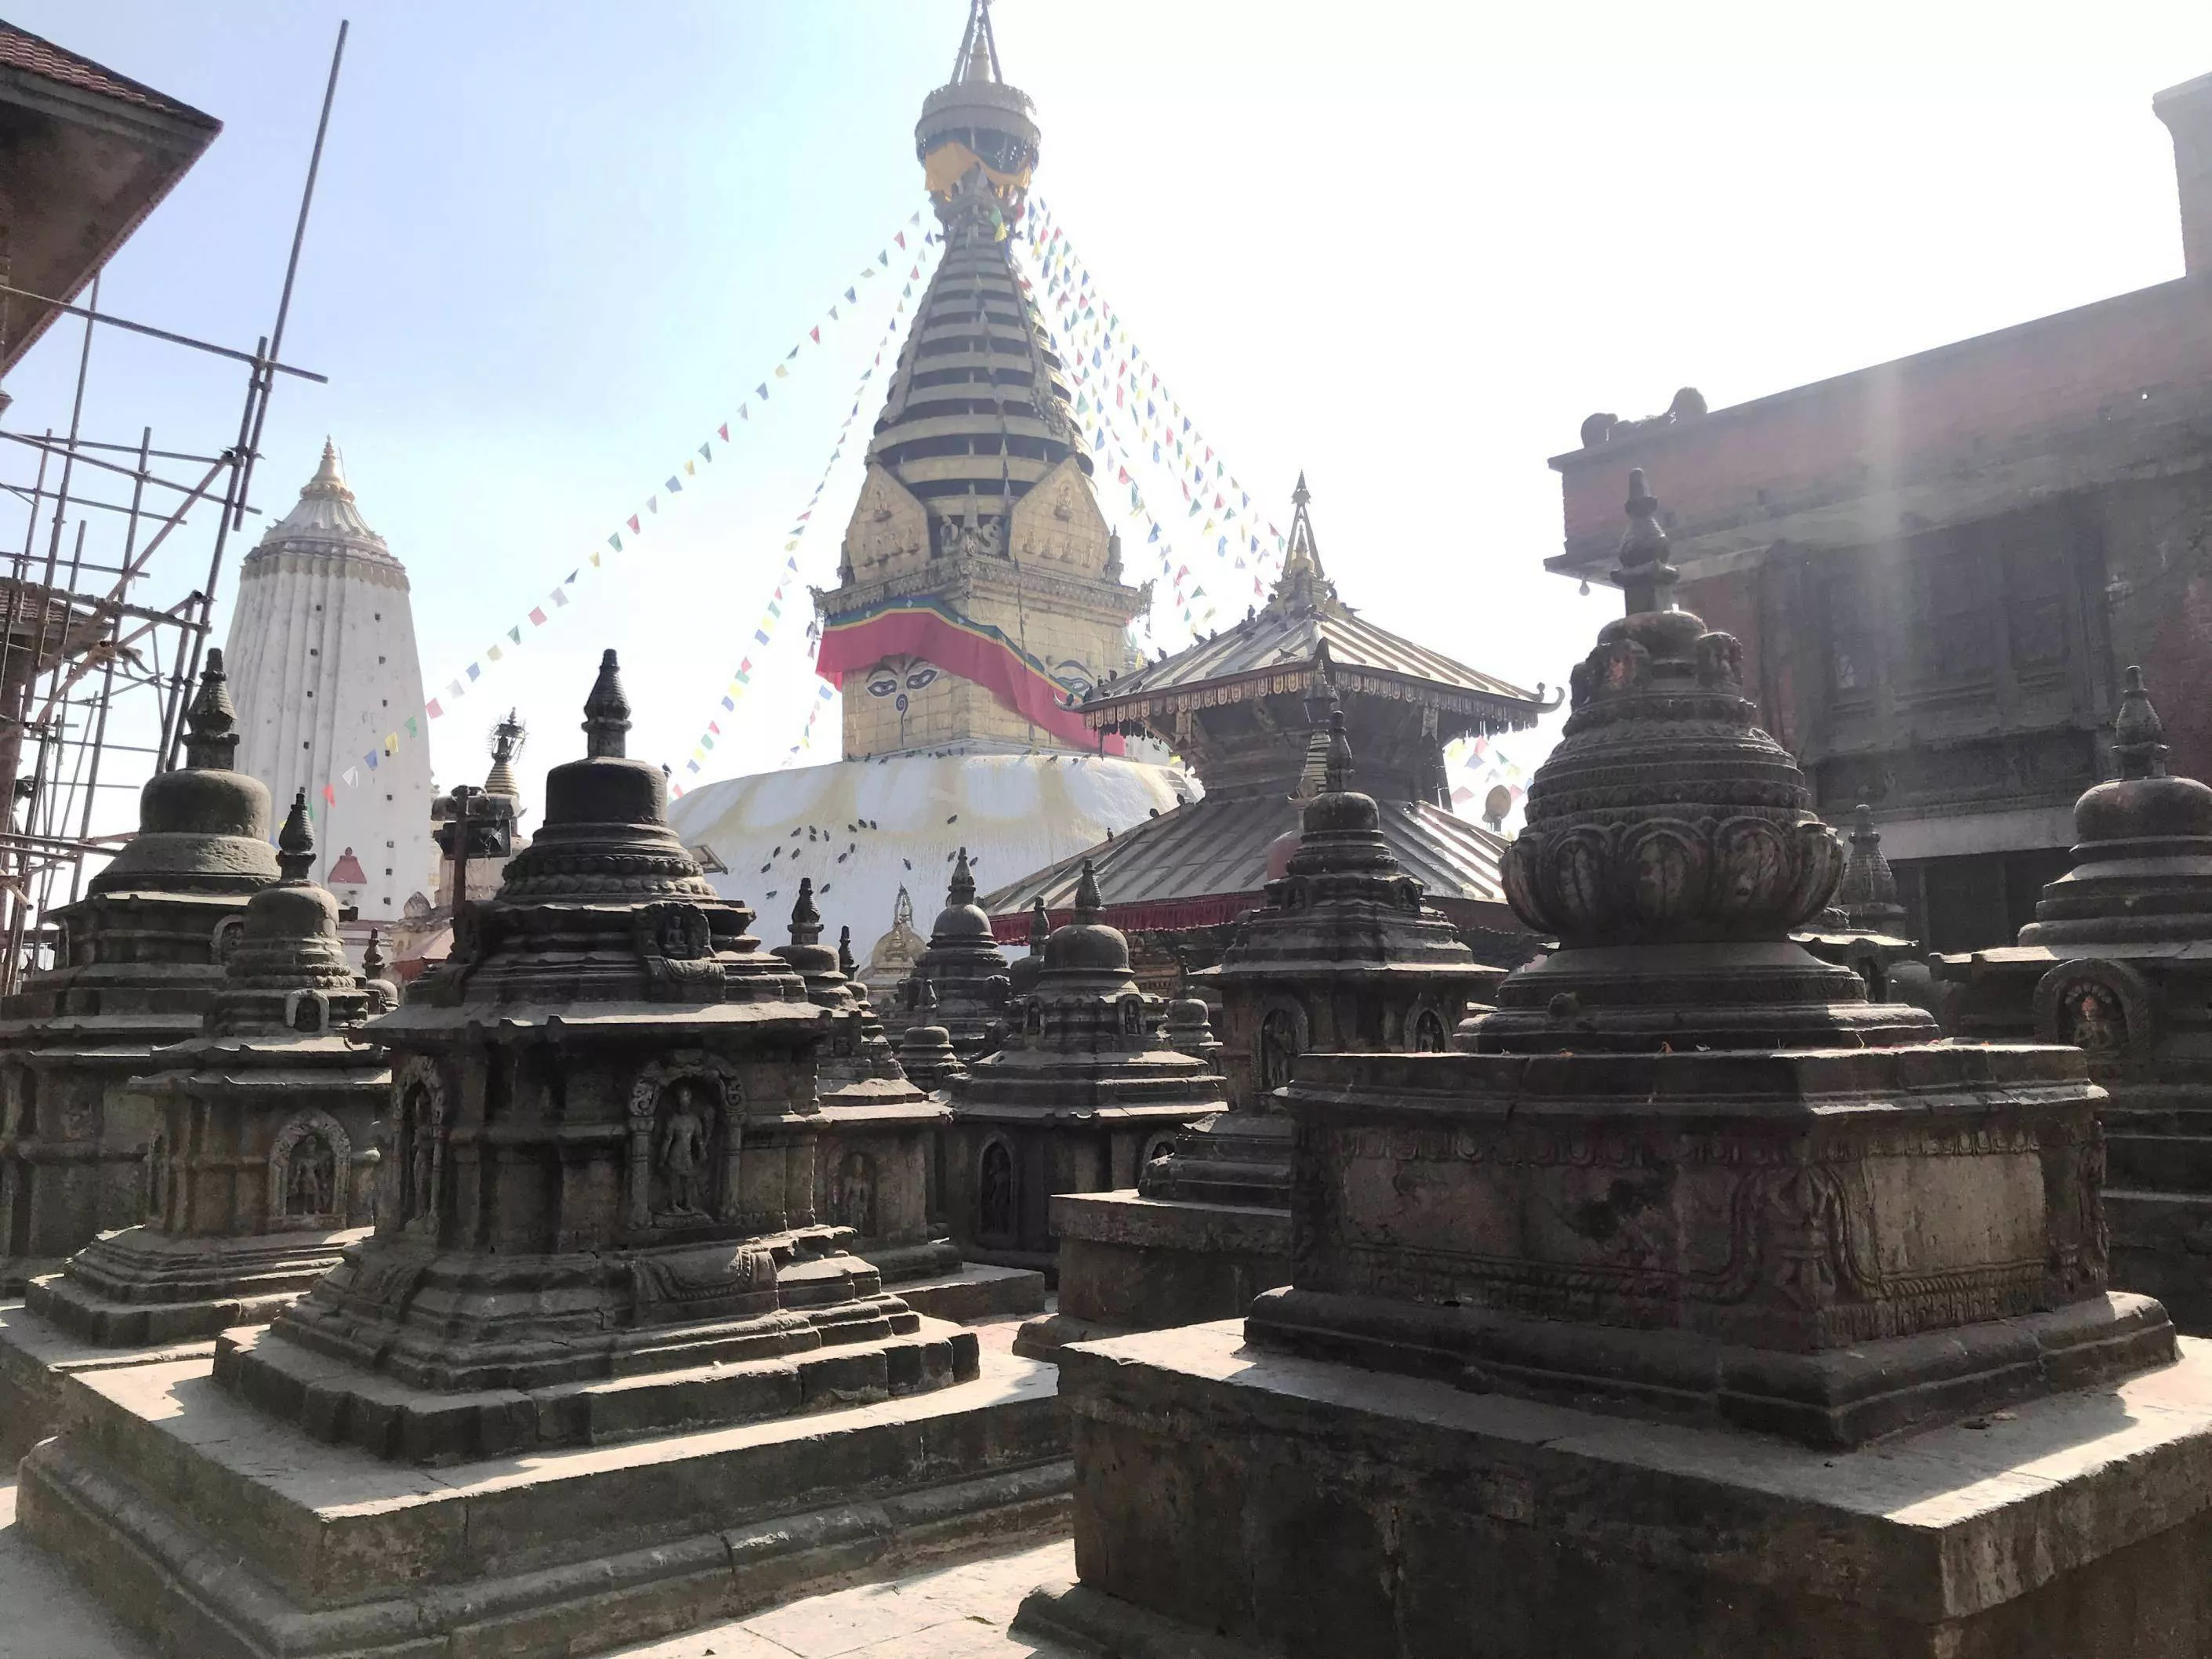 Swoyambhunath: The Monkey Temple